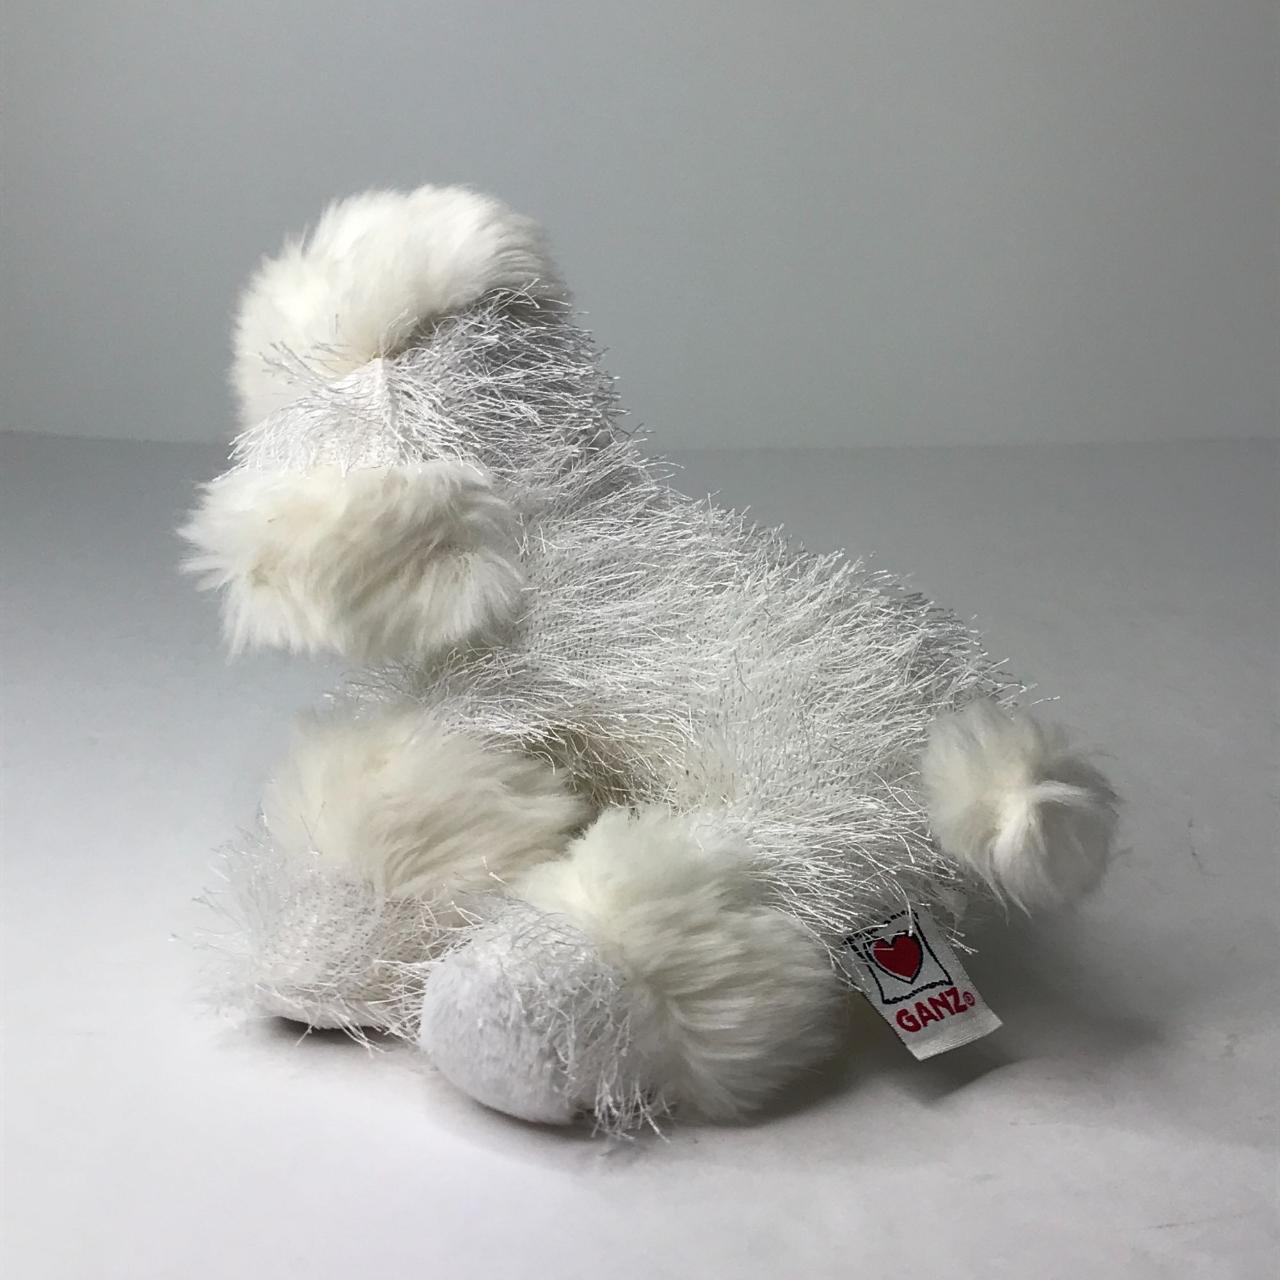 Ganz Webkinz Poodle HM014 Plush Beanie Stuffed... - Depop